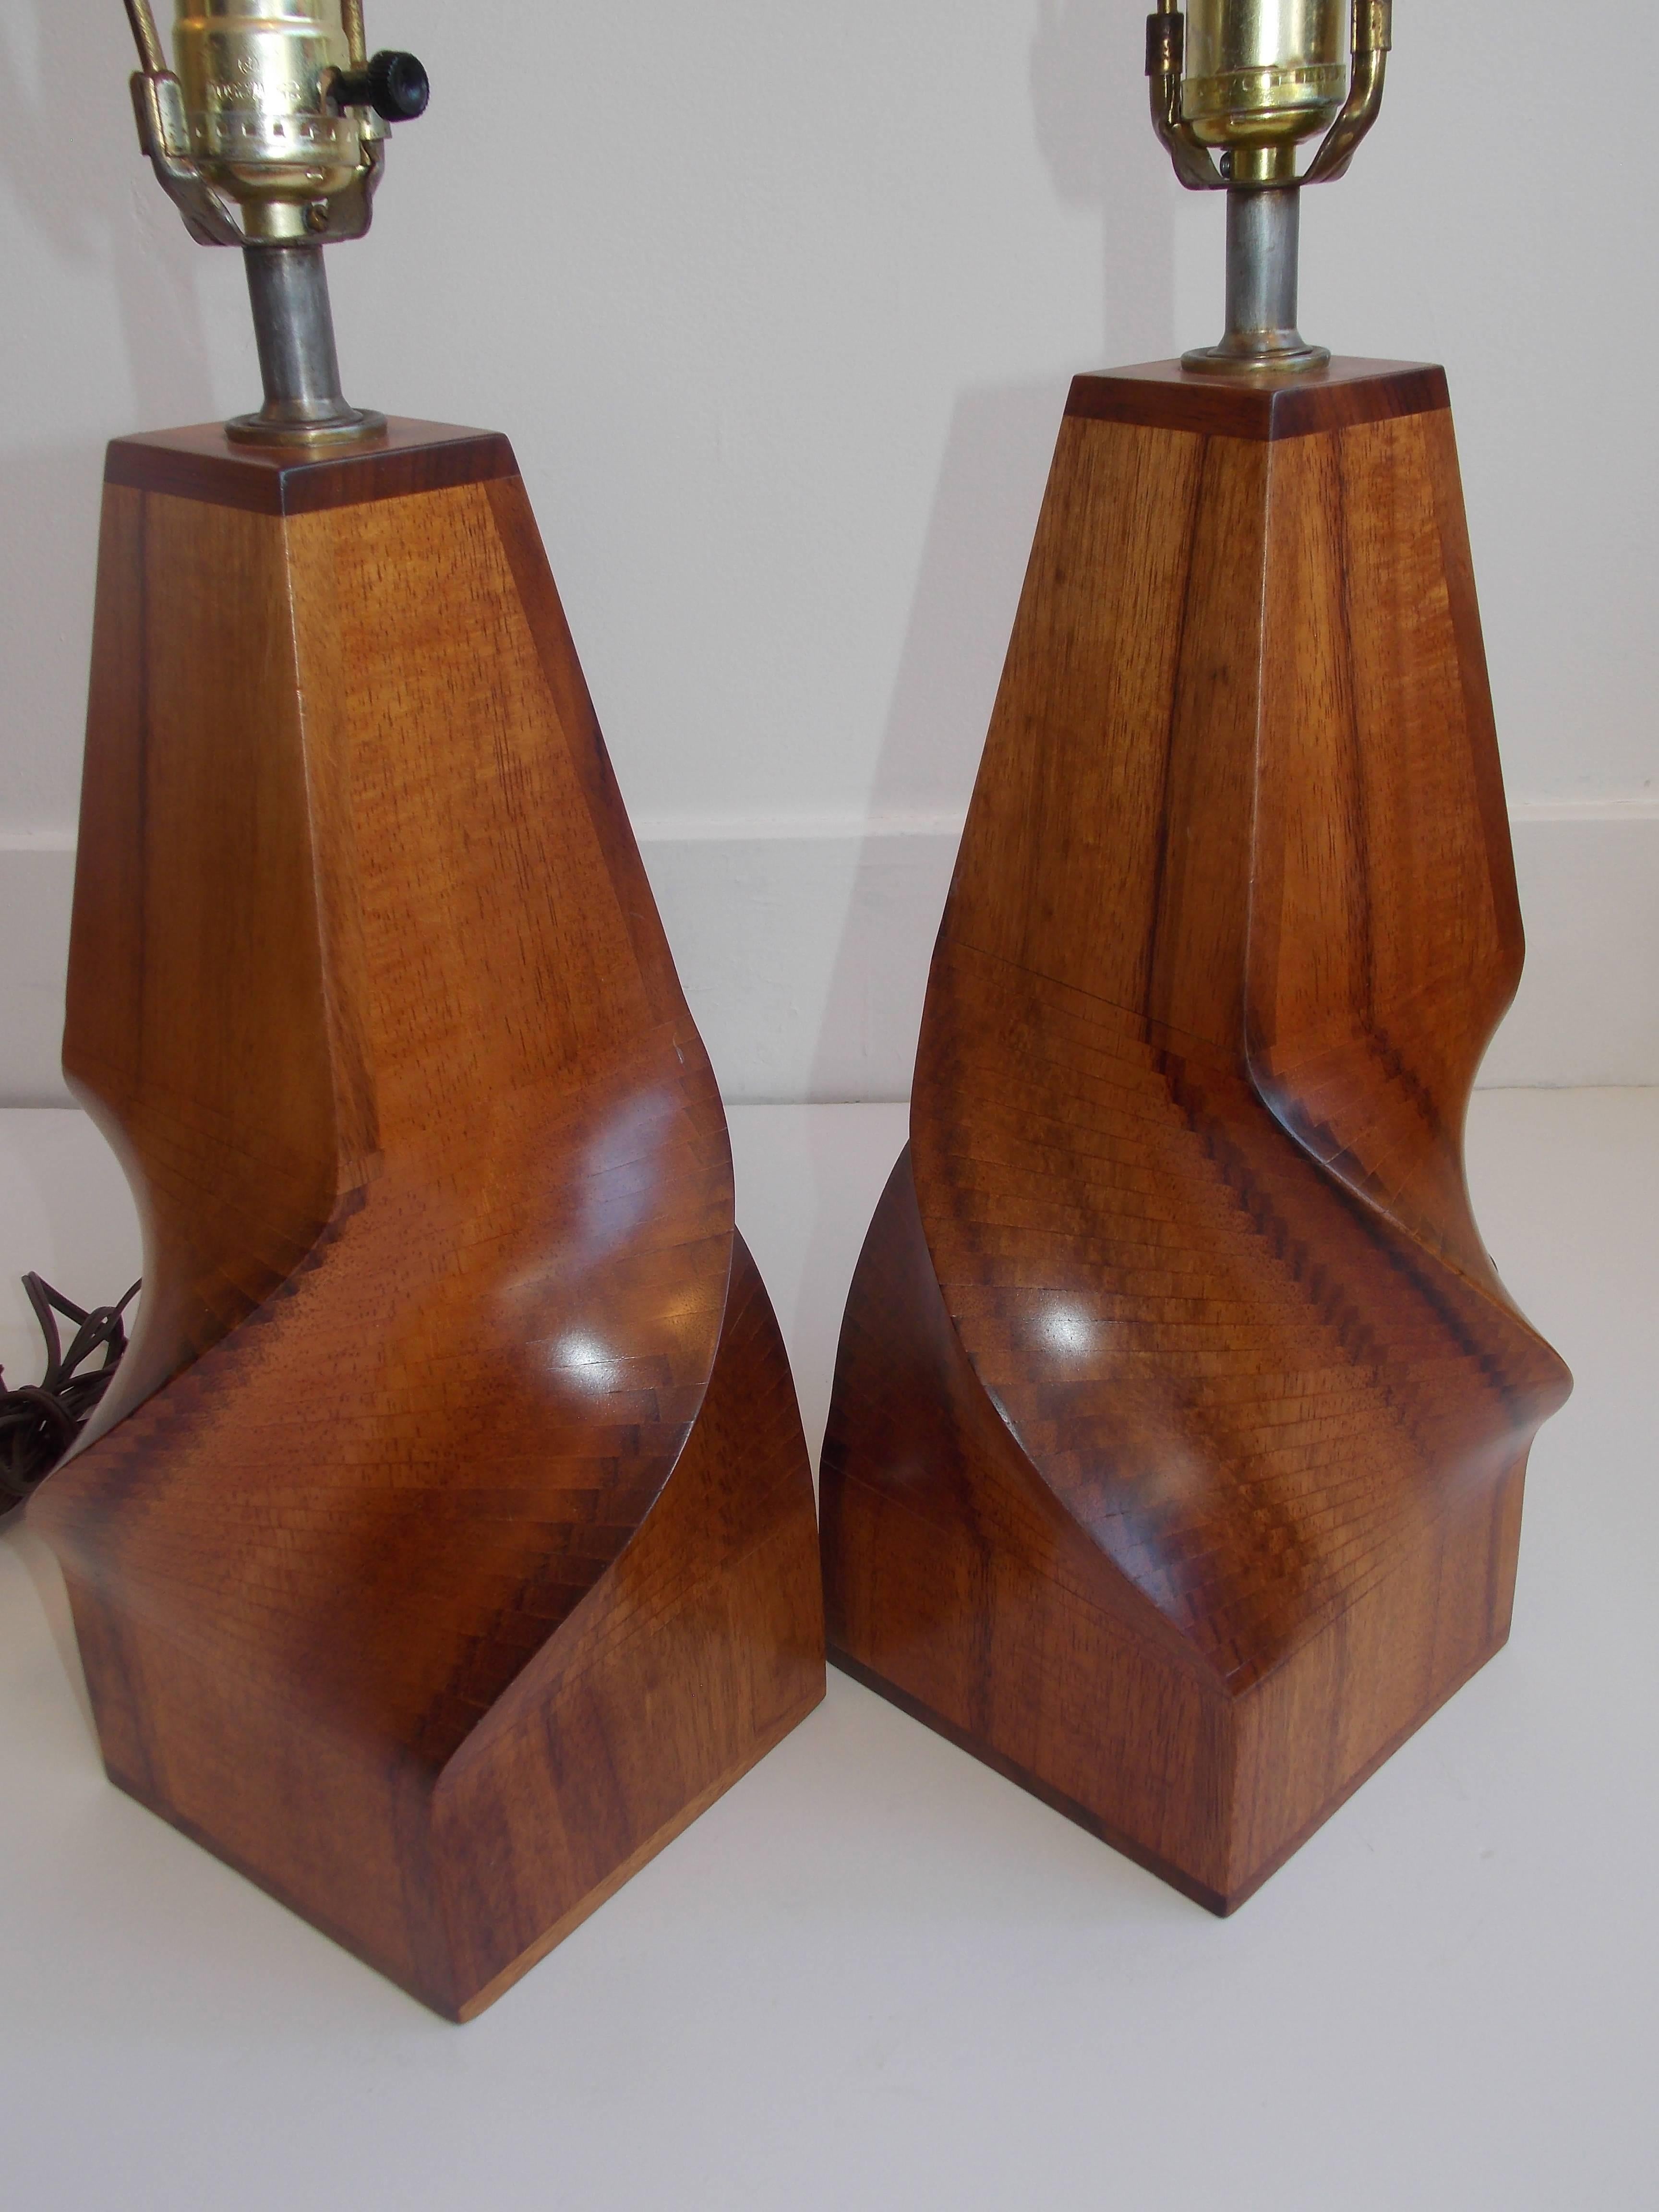 American Studio Crafted Artisan Wood Lamps